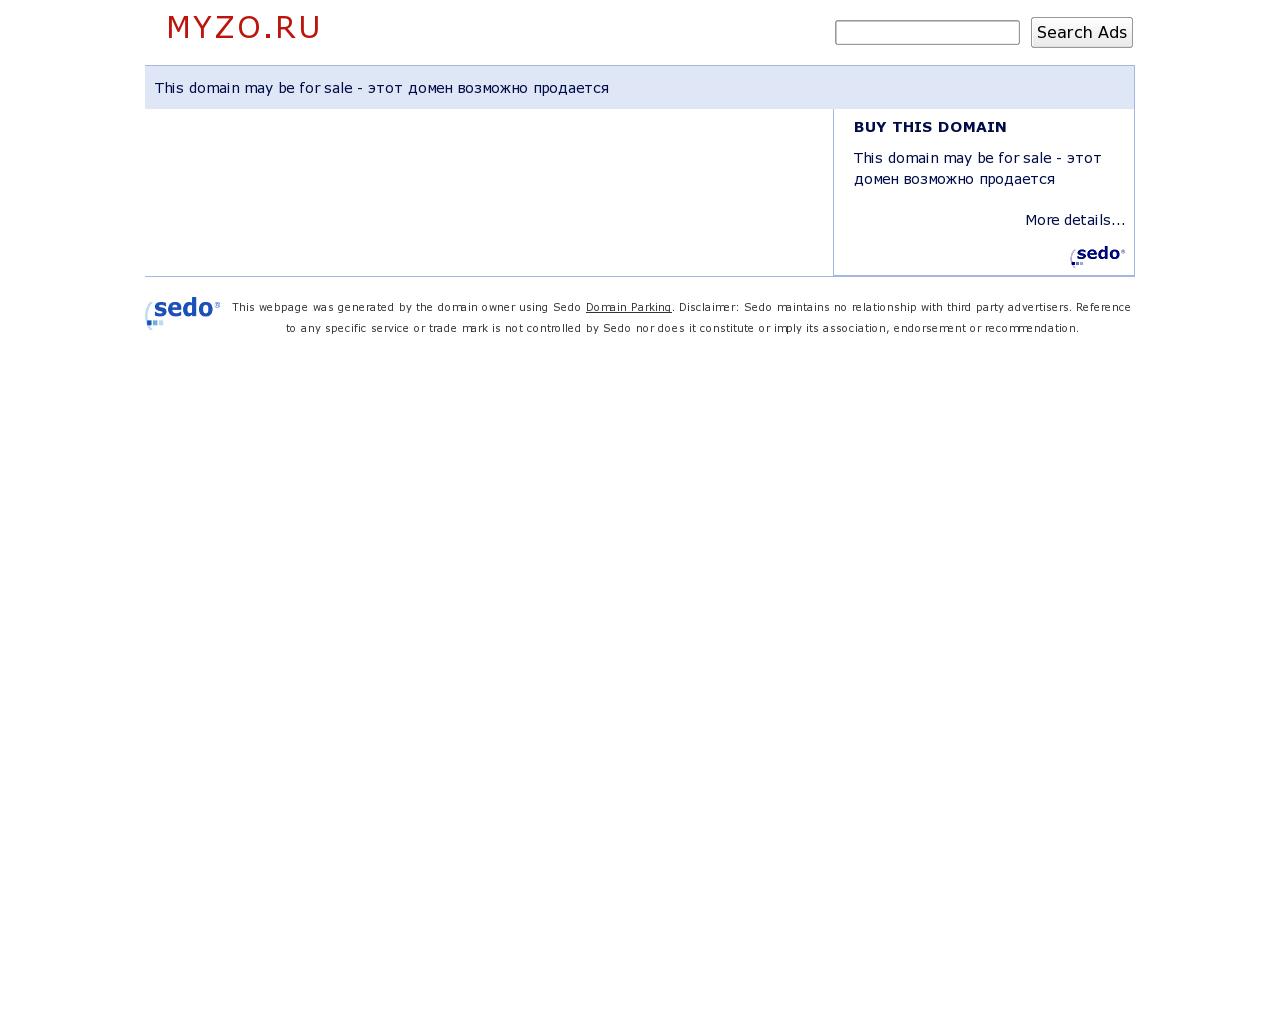 Изображение сайта myzo.ru в разрешении 1280x1024